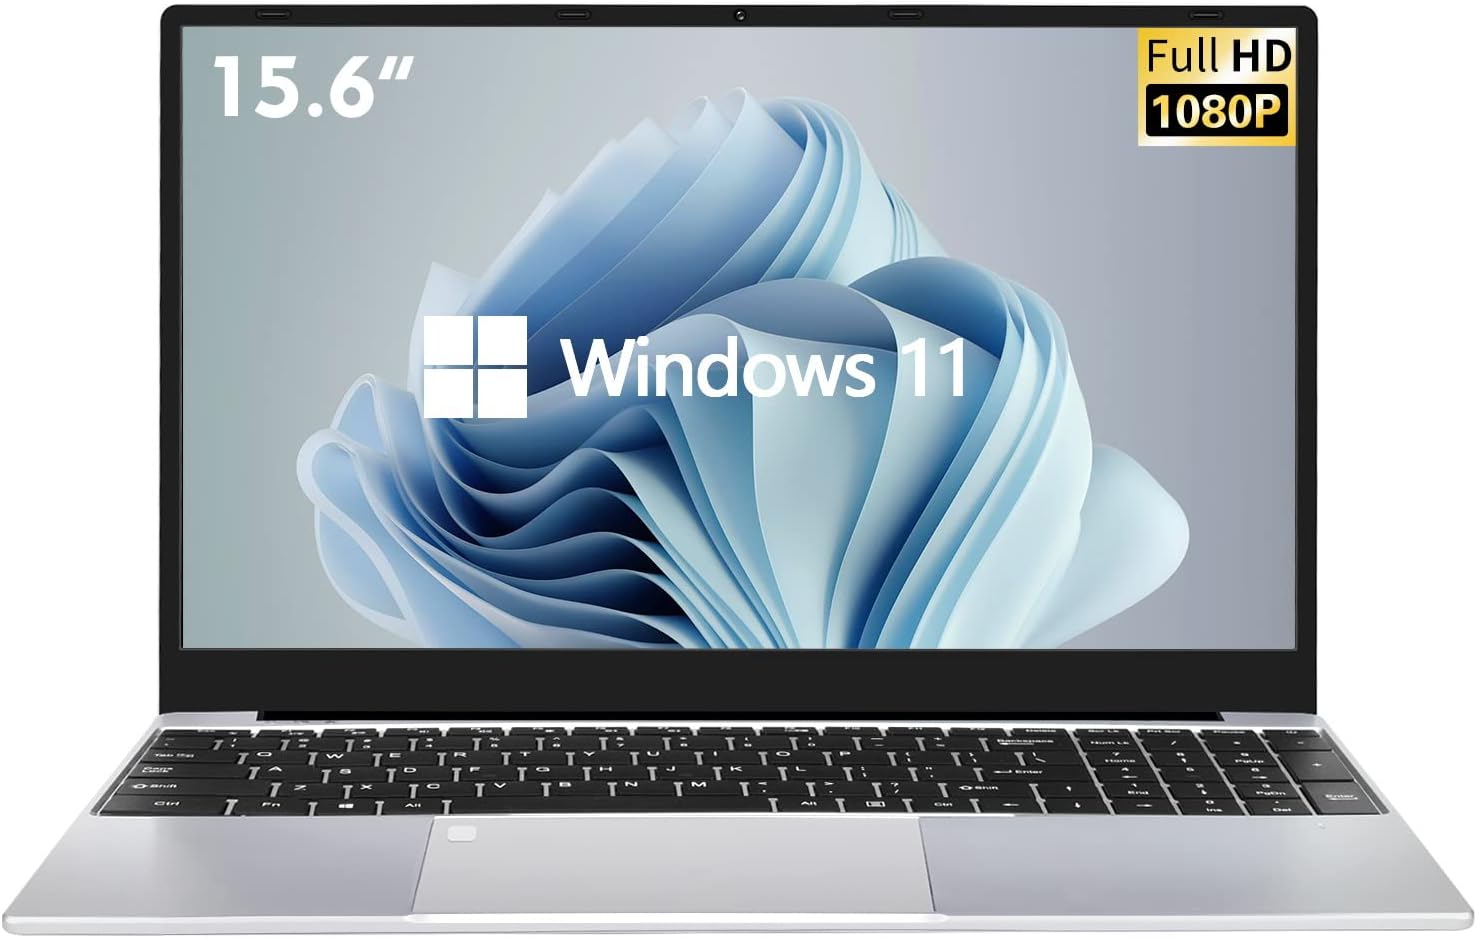 VGKE [Windows 11 Home] B15 Windows 11 Laptop with Fingerprint Reader, 15.6" Full HD 1920 * 1080 IPS, Intel Celeron J4125 Processor, 12GB RAM LPDDR4, 256GB SSD, Backlit Keyboard